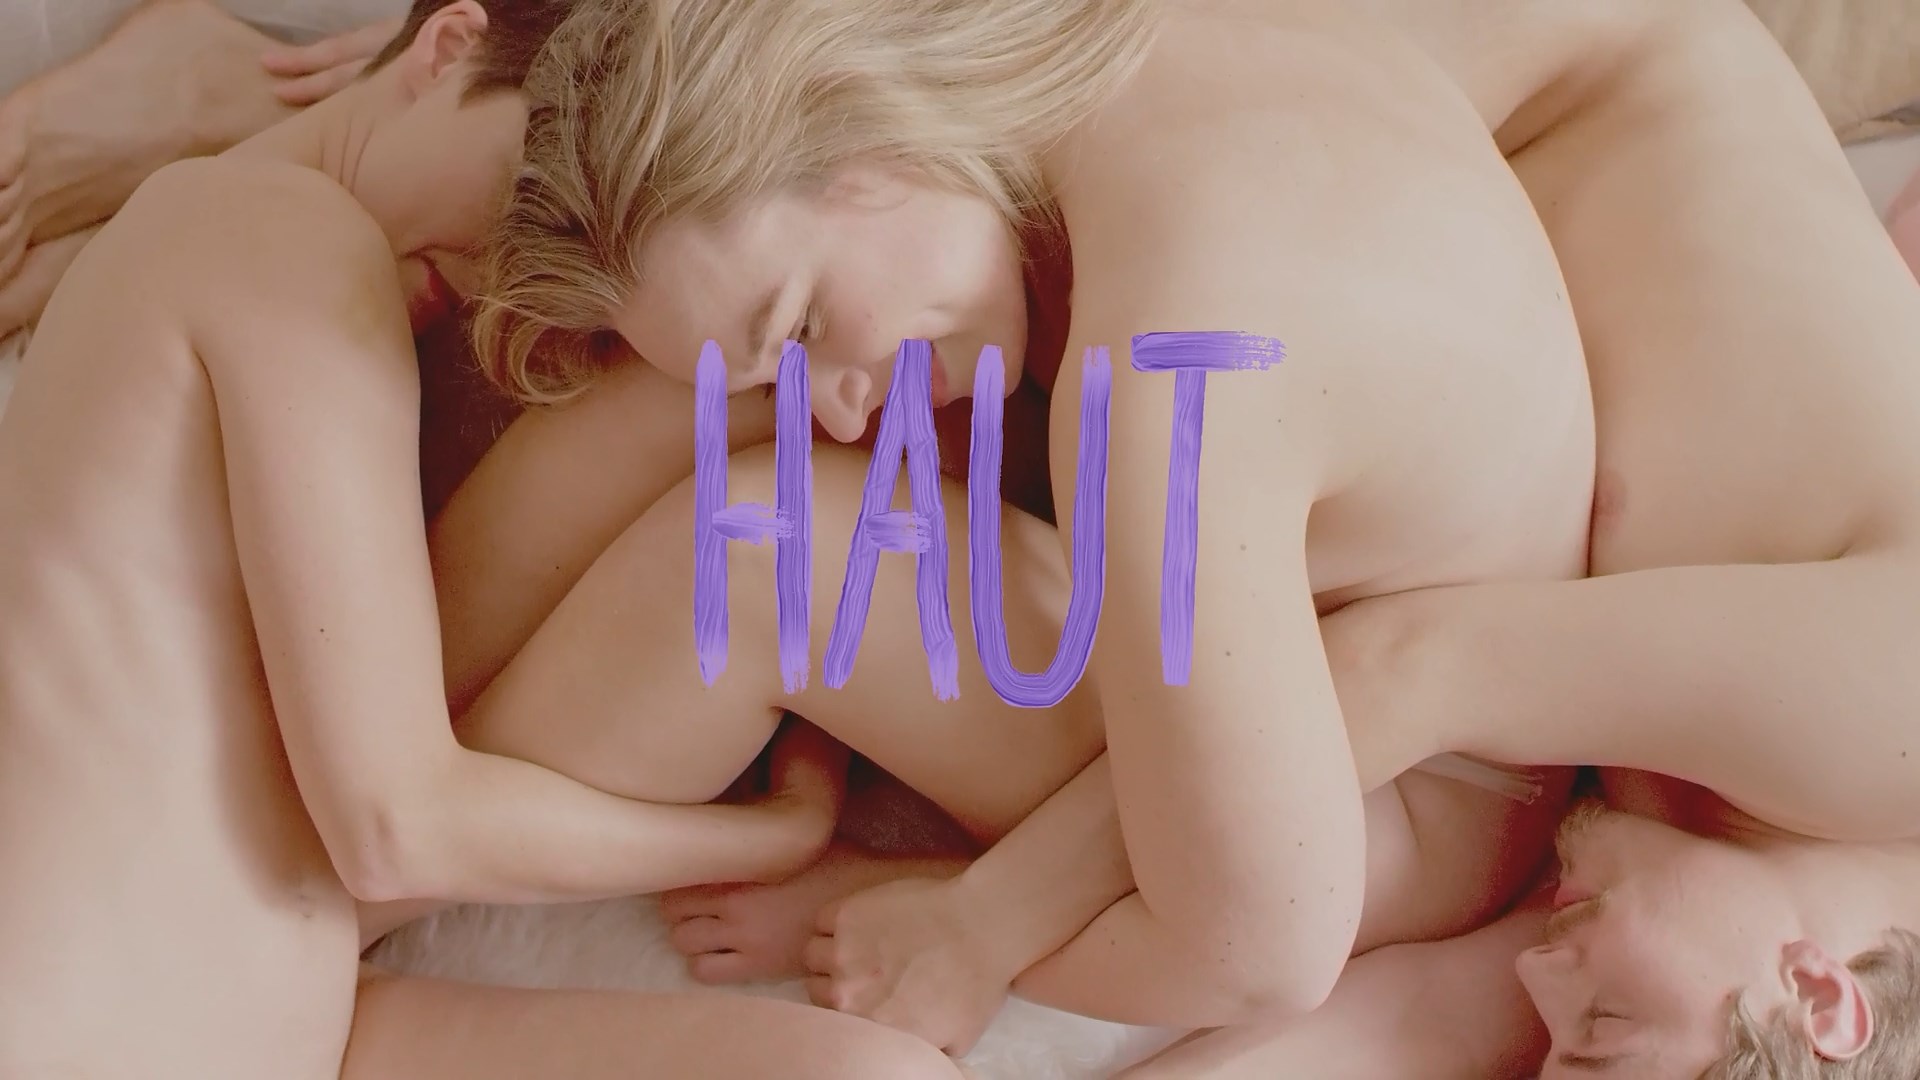 Peh Sex Movies - 2019 Â» Celebs Nude Video - NudeCelebVideo.Net